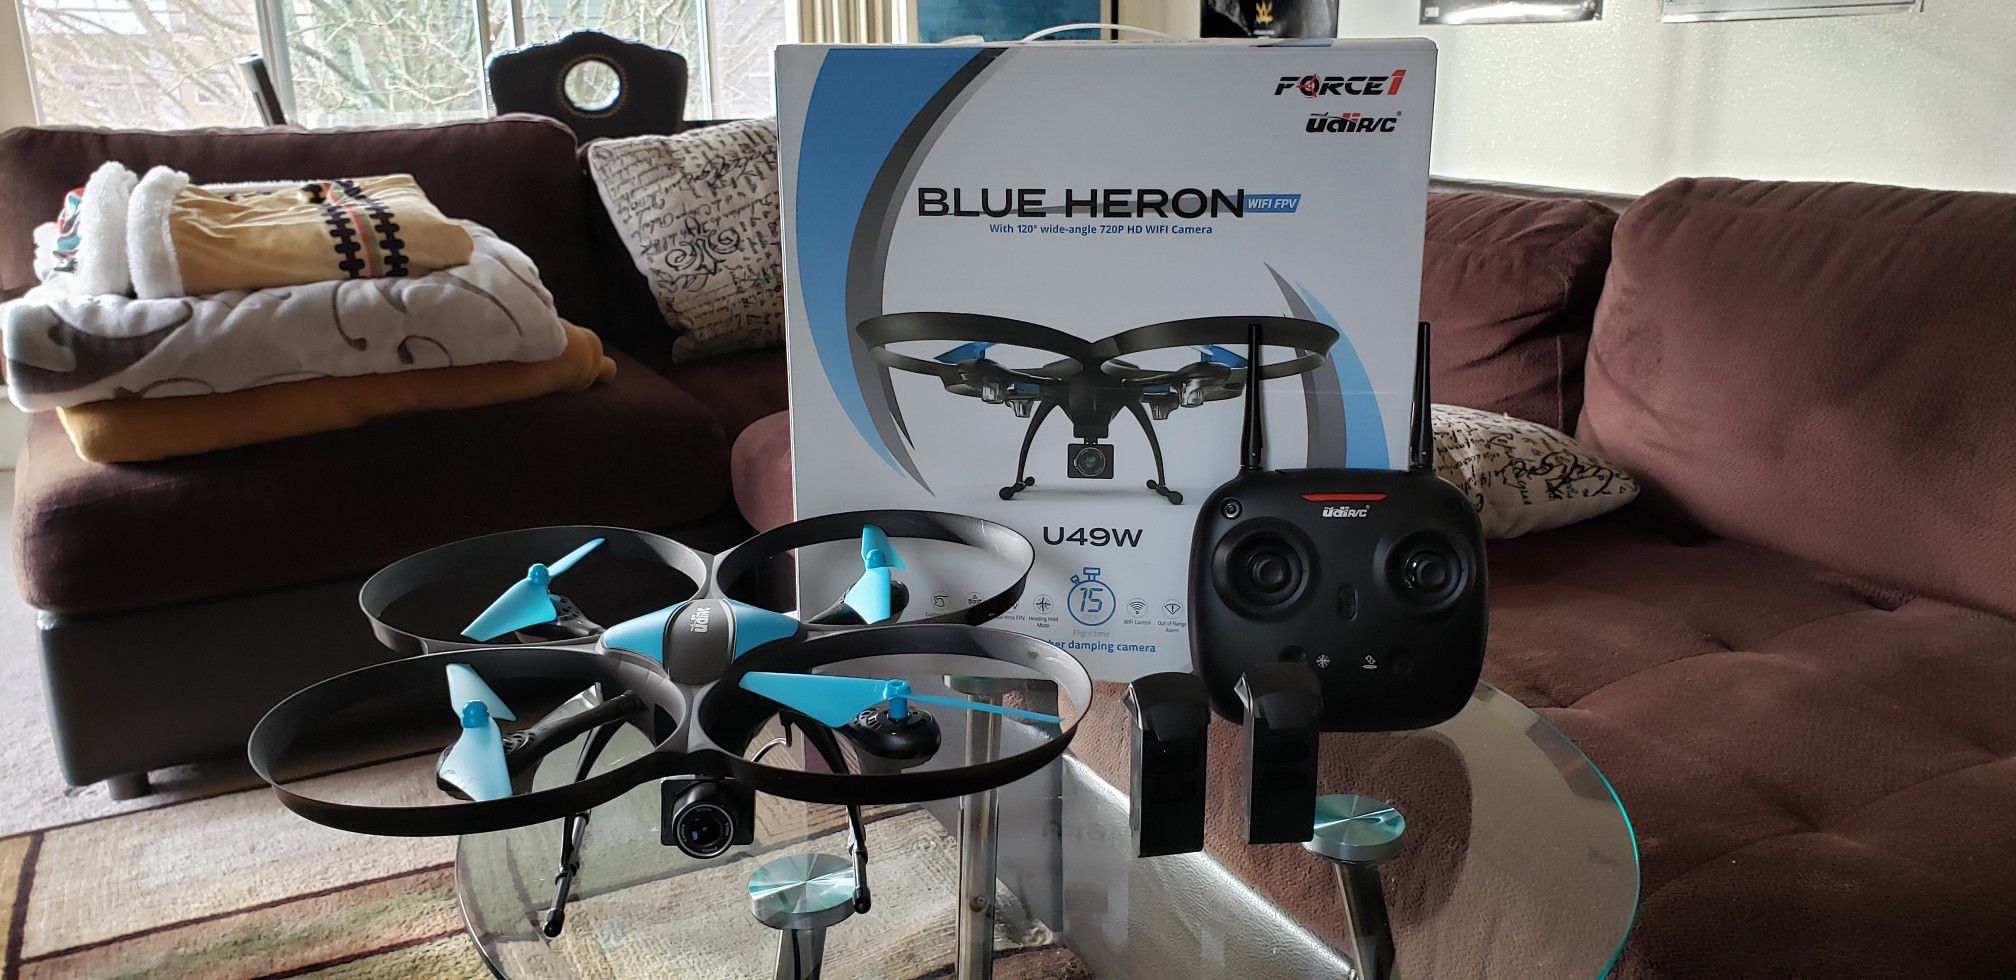 Blue Heron 720p drone bluetooth